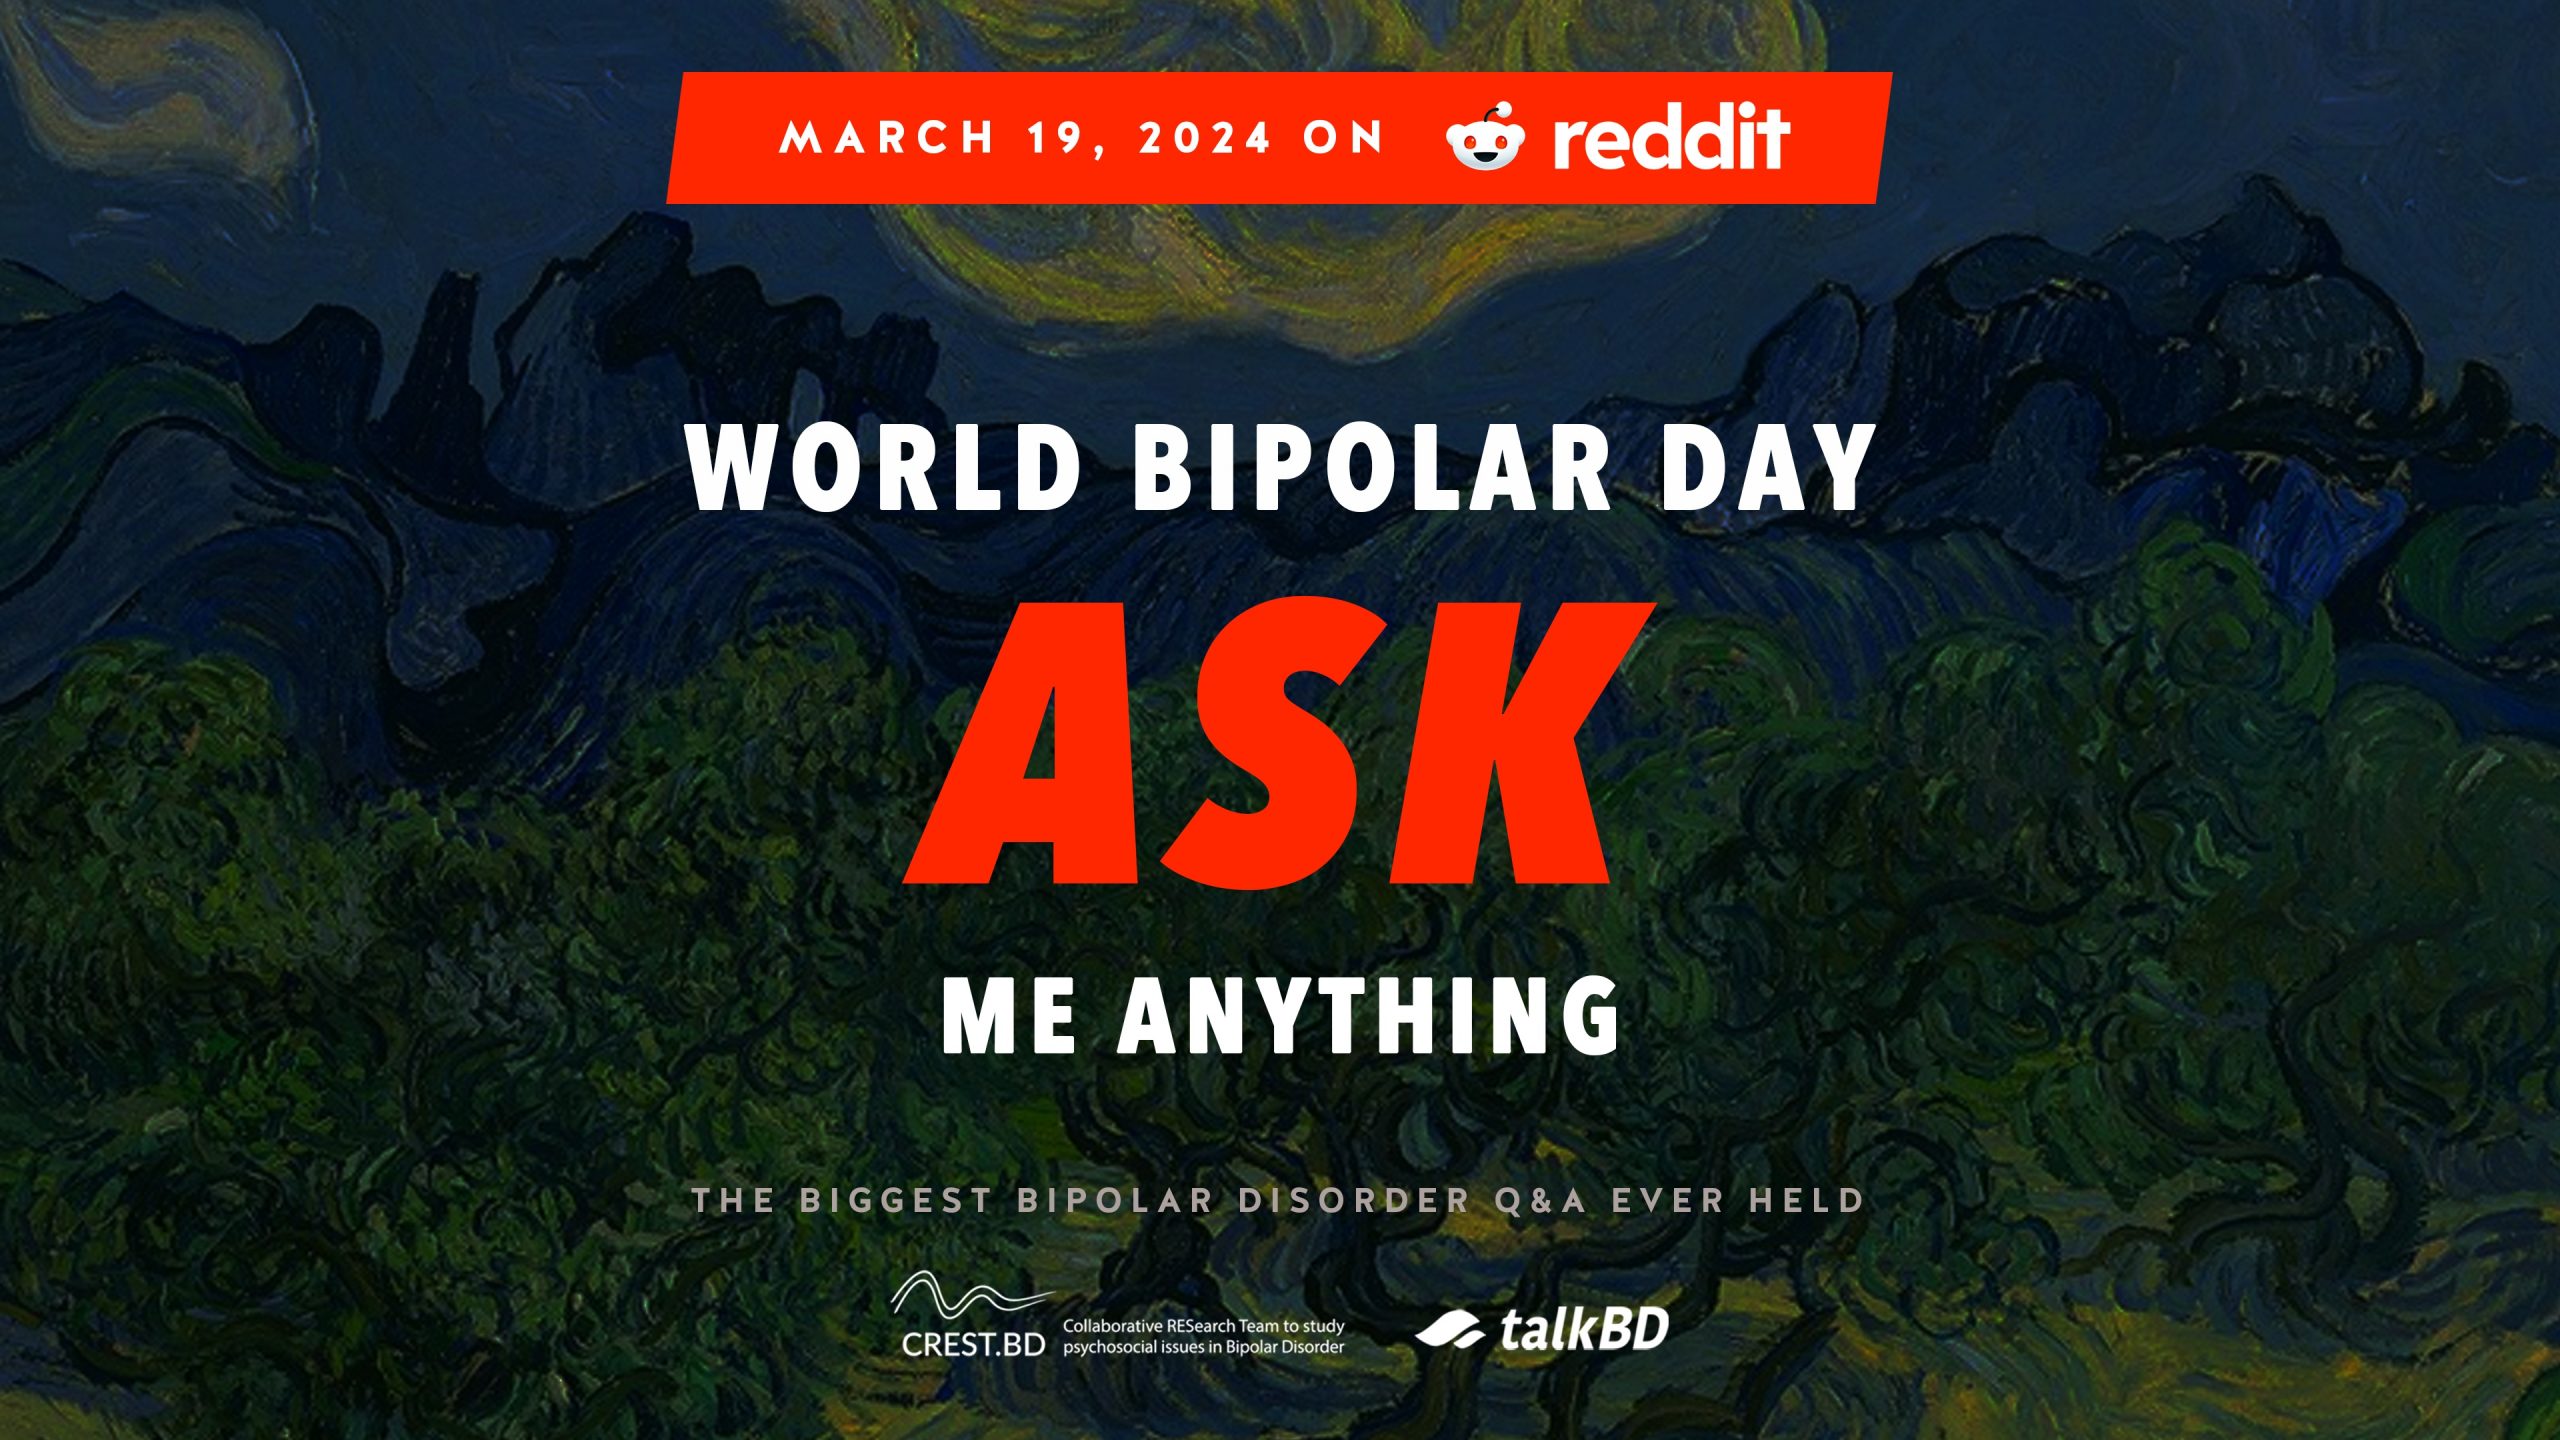 World Bipolar Day “Ask Me Anything” 2024